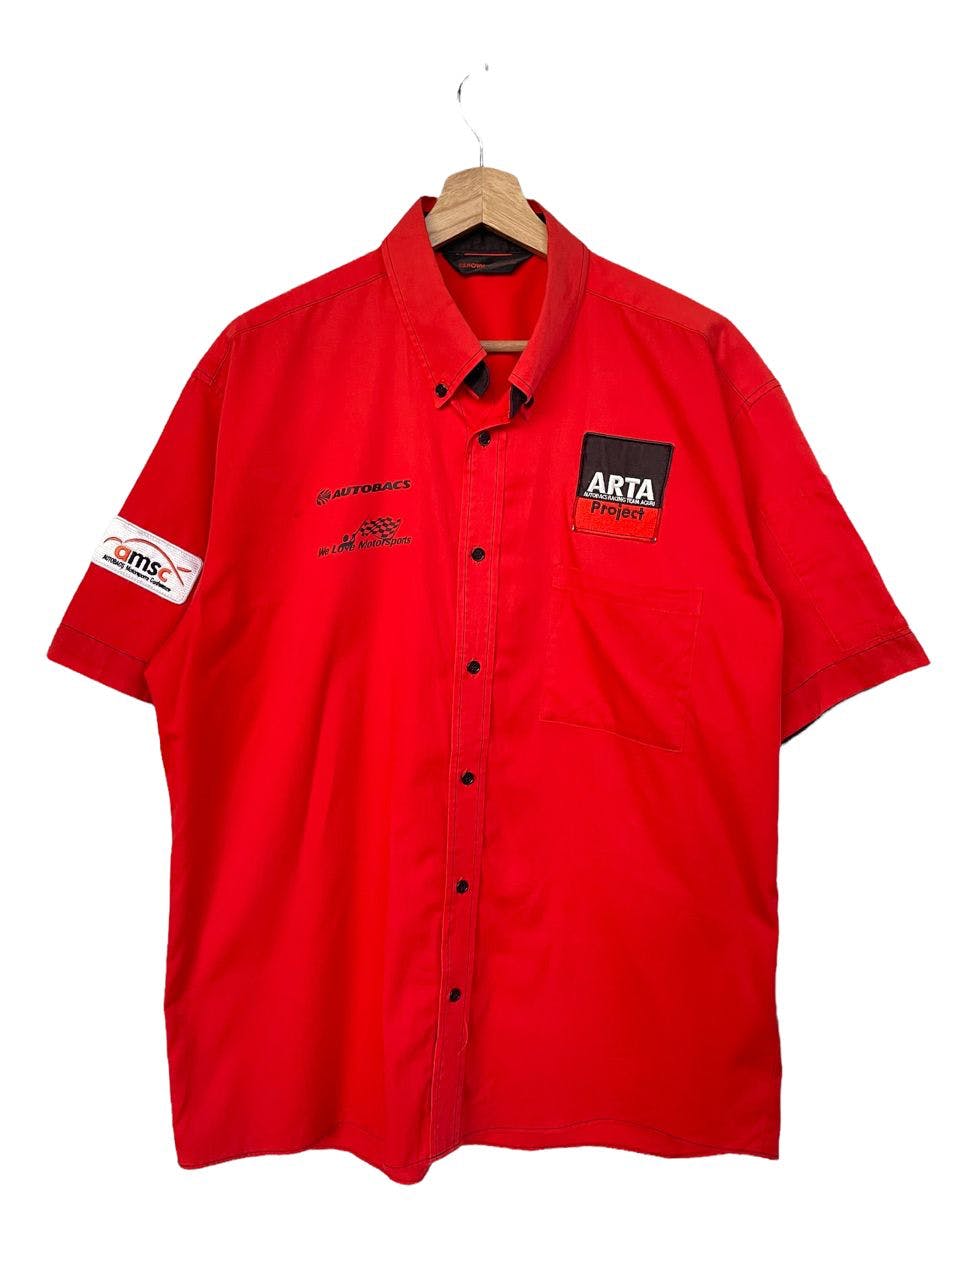 Workers - Nice Autobacs Racing Team Arta Project Shirt - 1